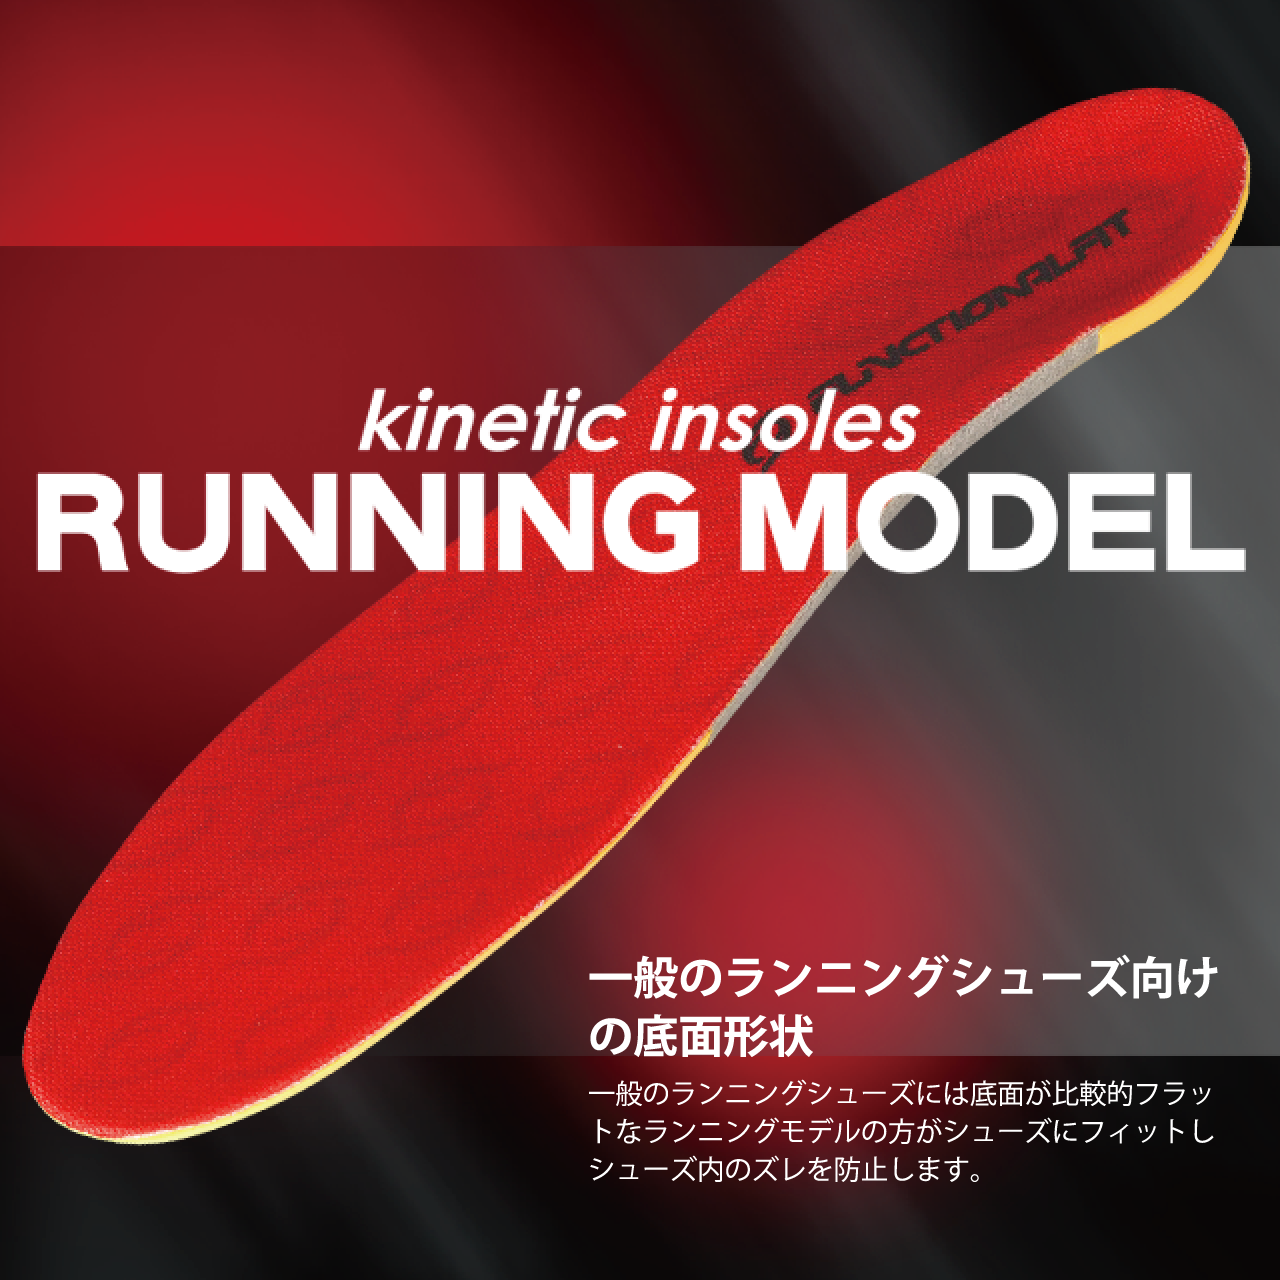 kinetic insoles RACING MODEL